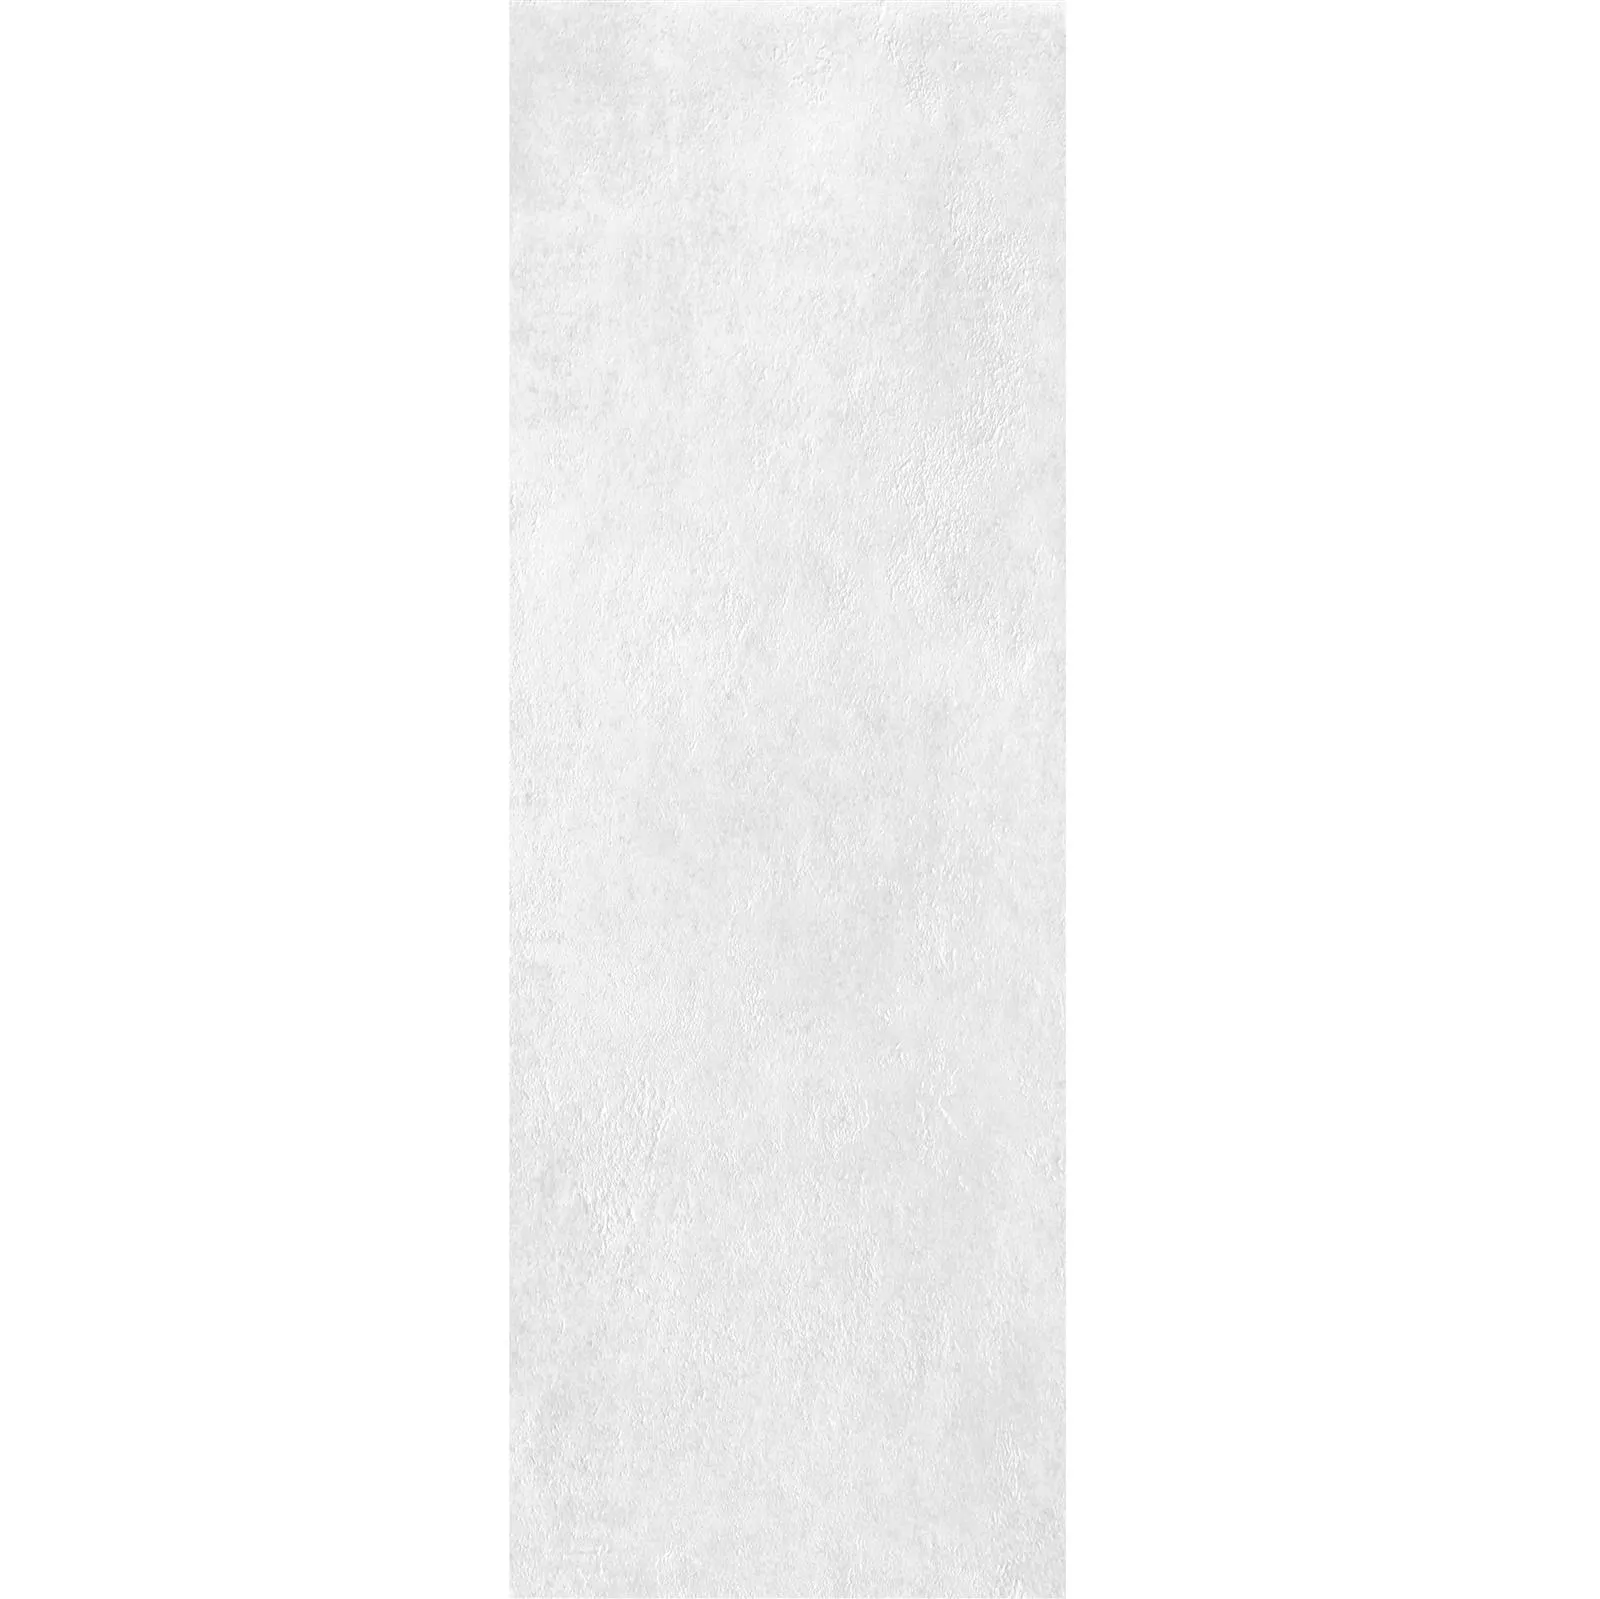 Muster Wandfliesen Alexander Steinoptik Weiß 30x90cm